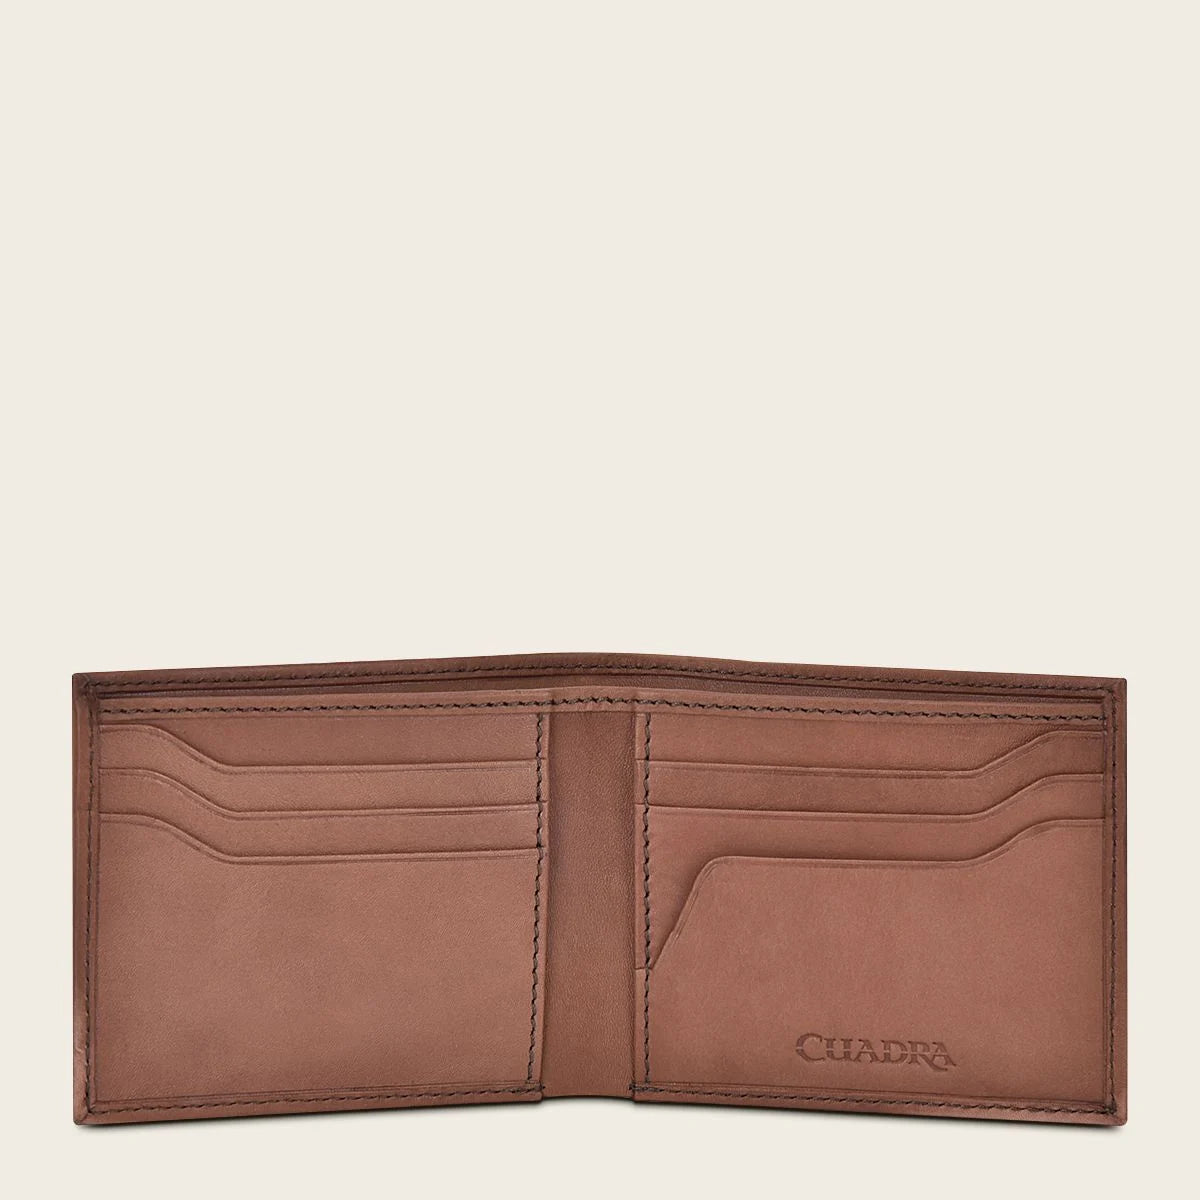 Gradient brown bovine leather wallet 2